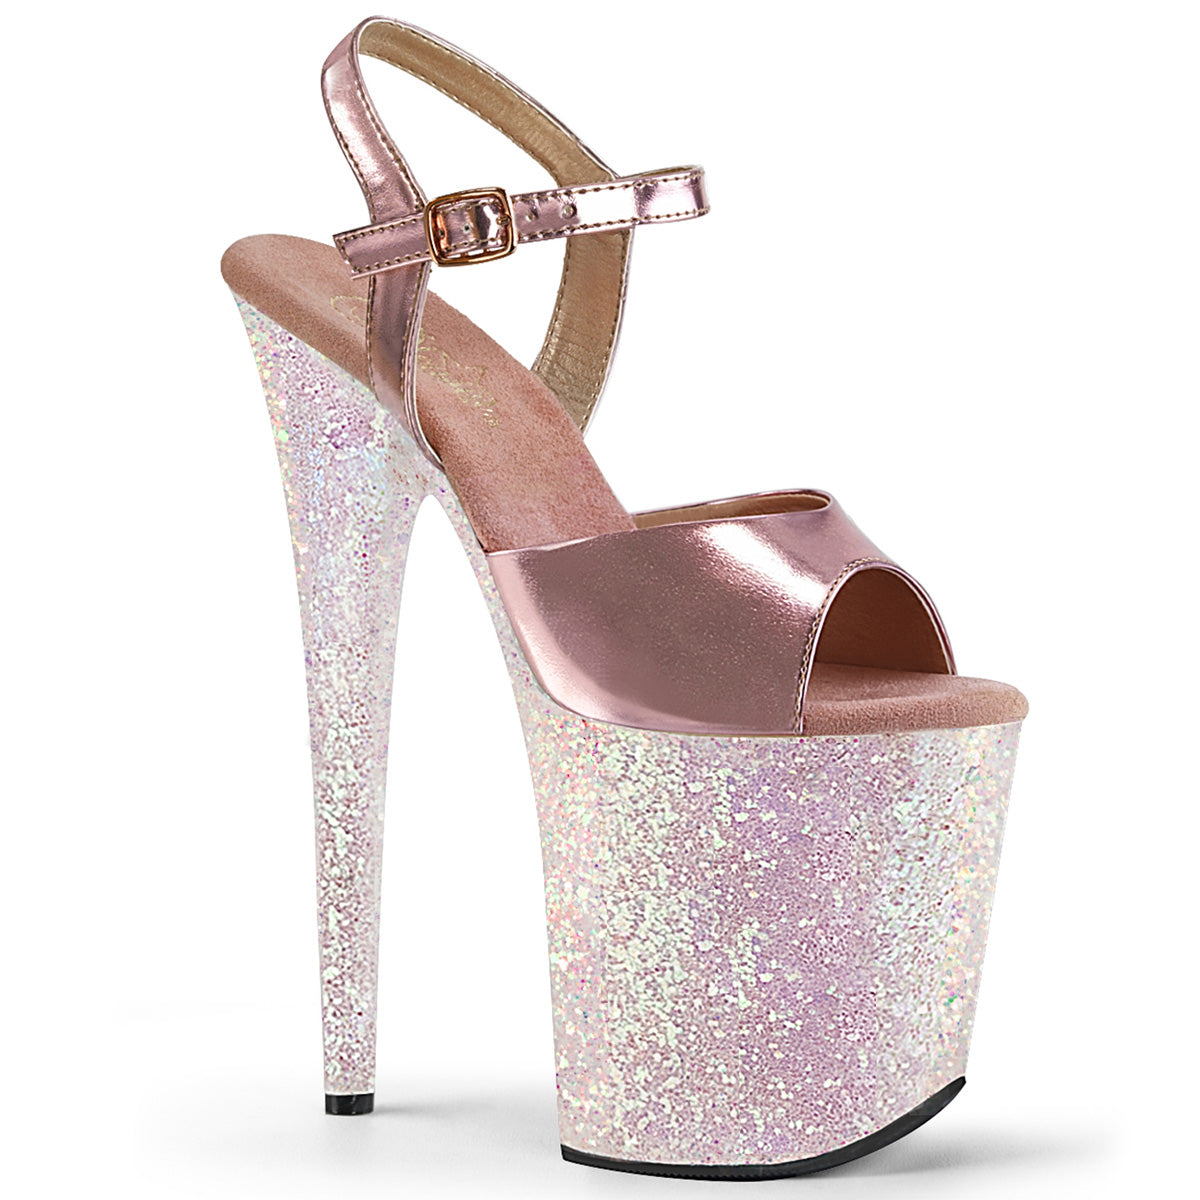 Pleaser Womens Sandals FLAMINGO-809LG Rose Gold Metallic Pu/Opal Multi Glitter